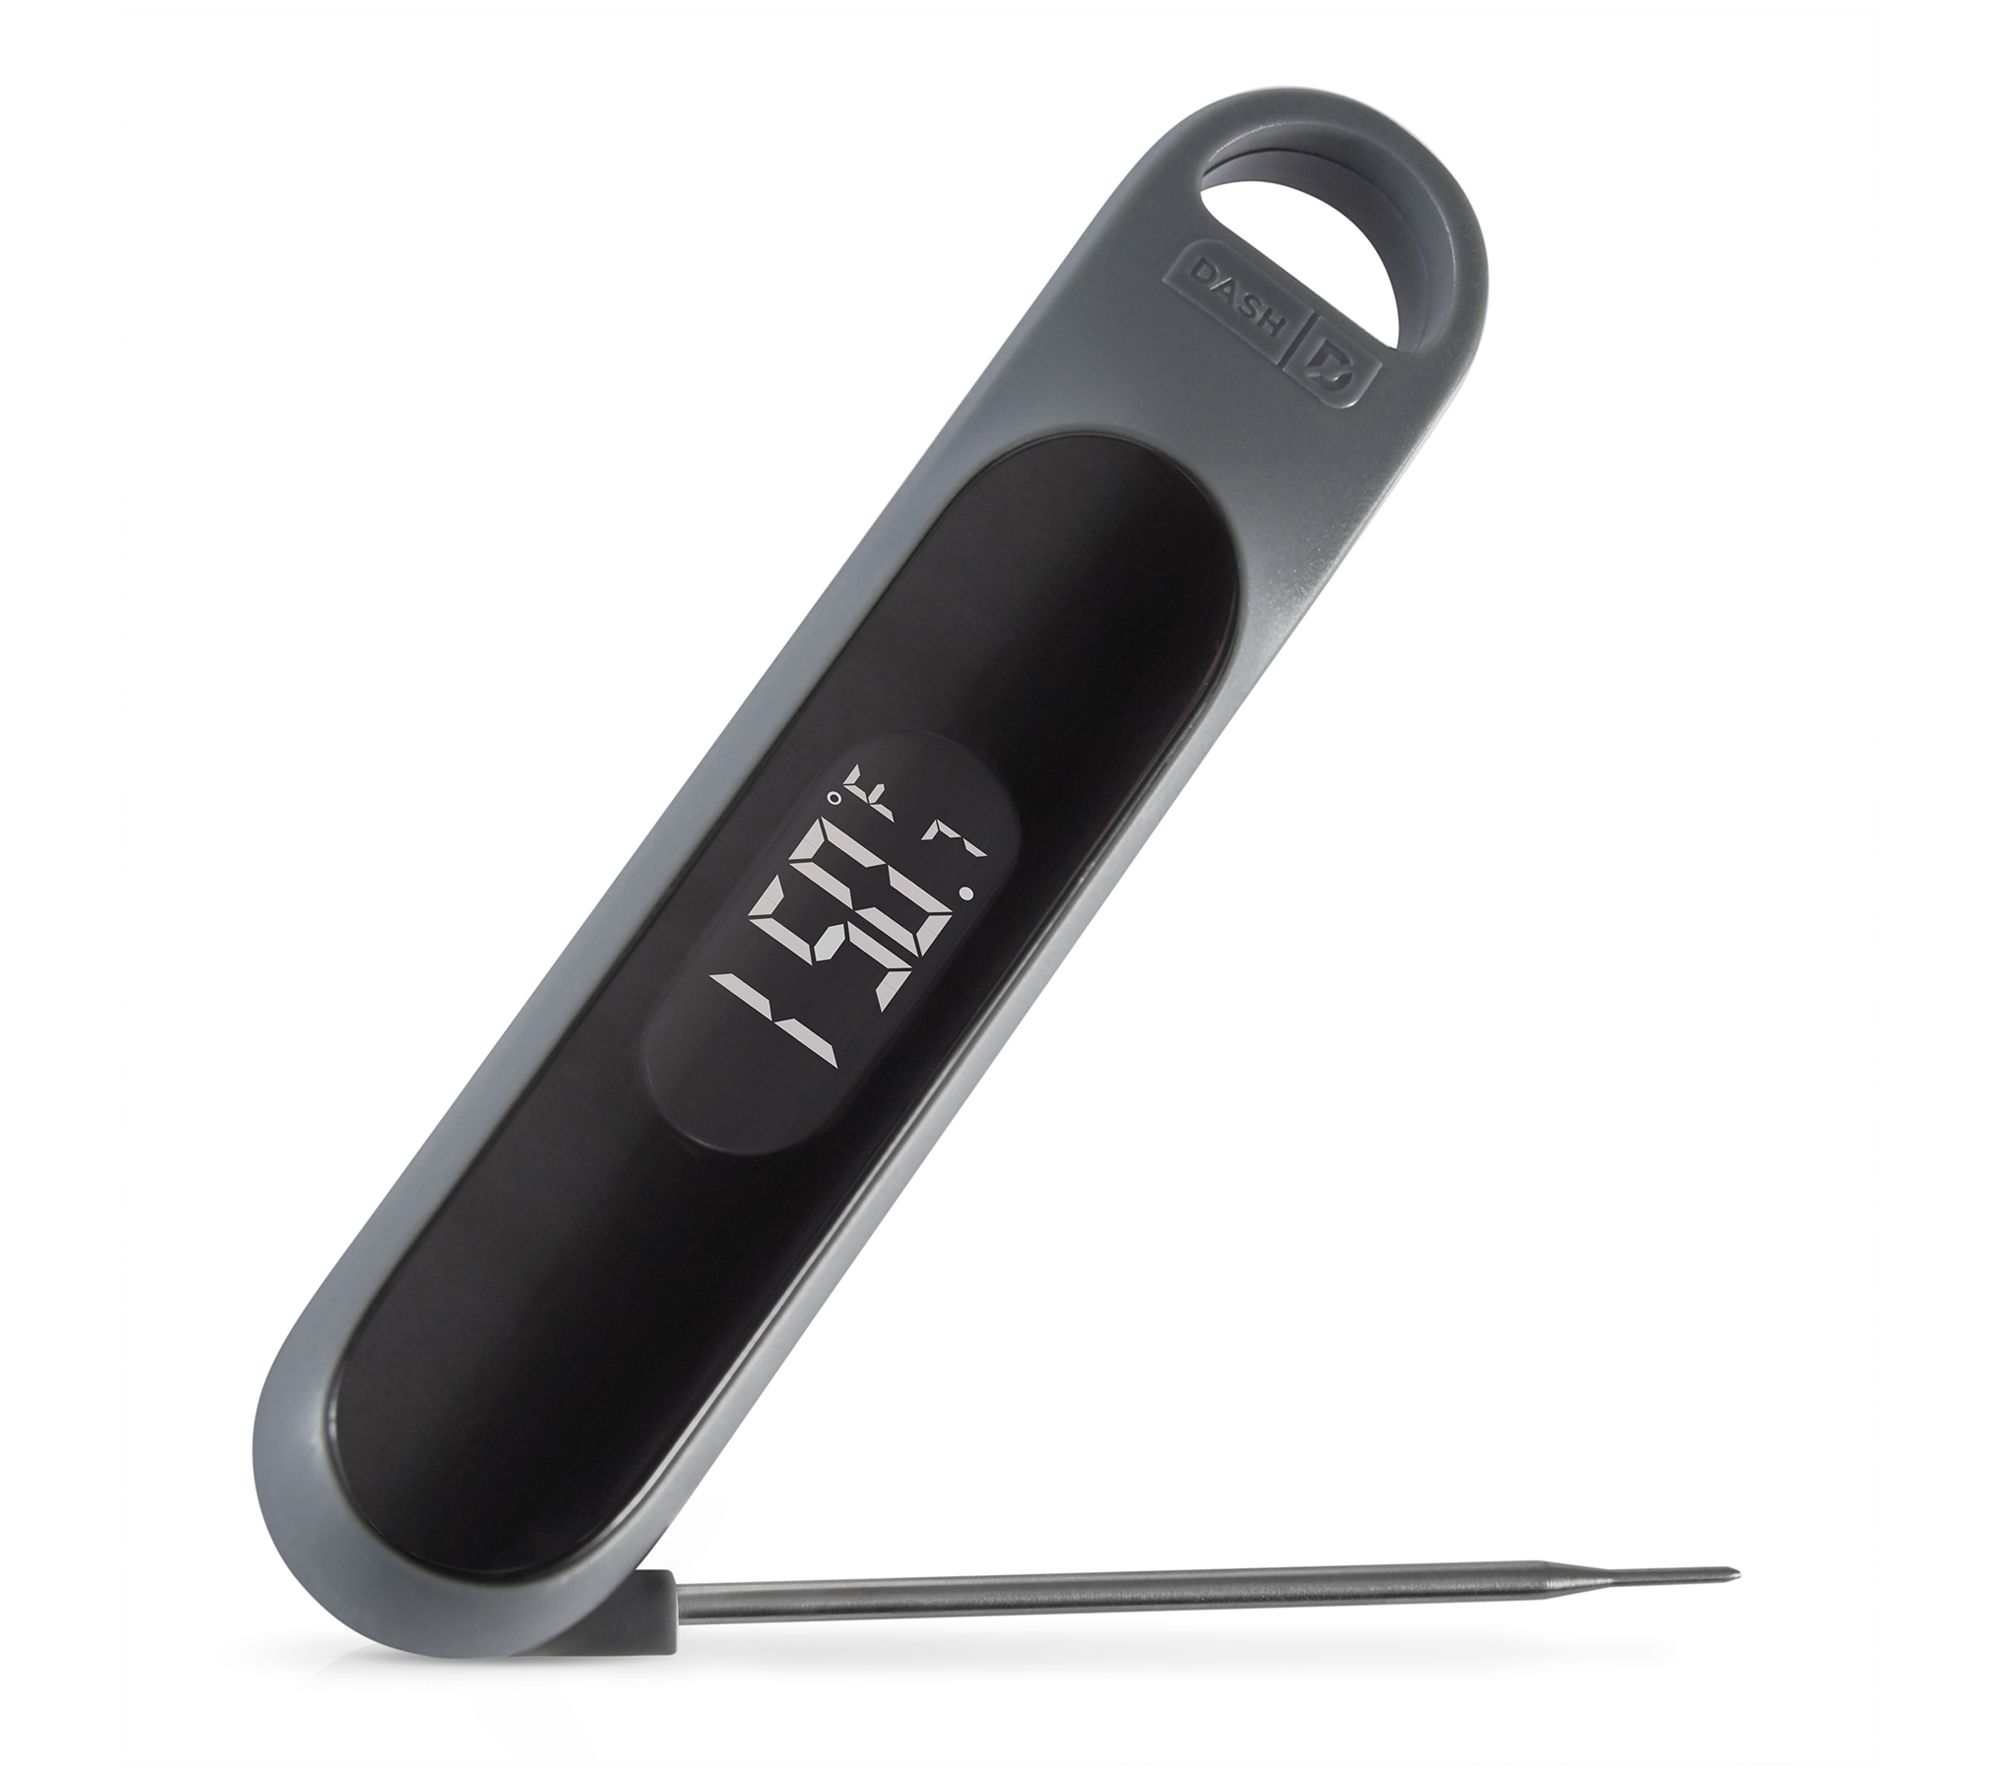 KitchenAid Digital Instant-Read Thermometer, Black